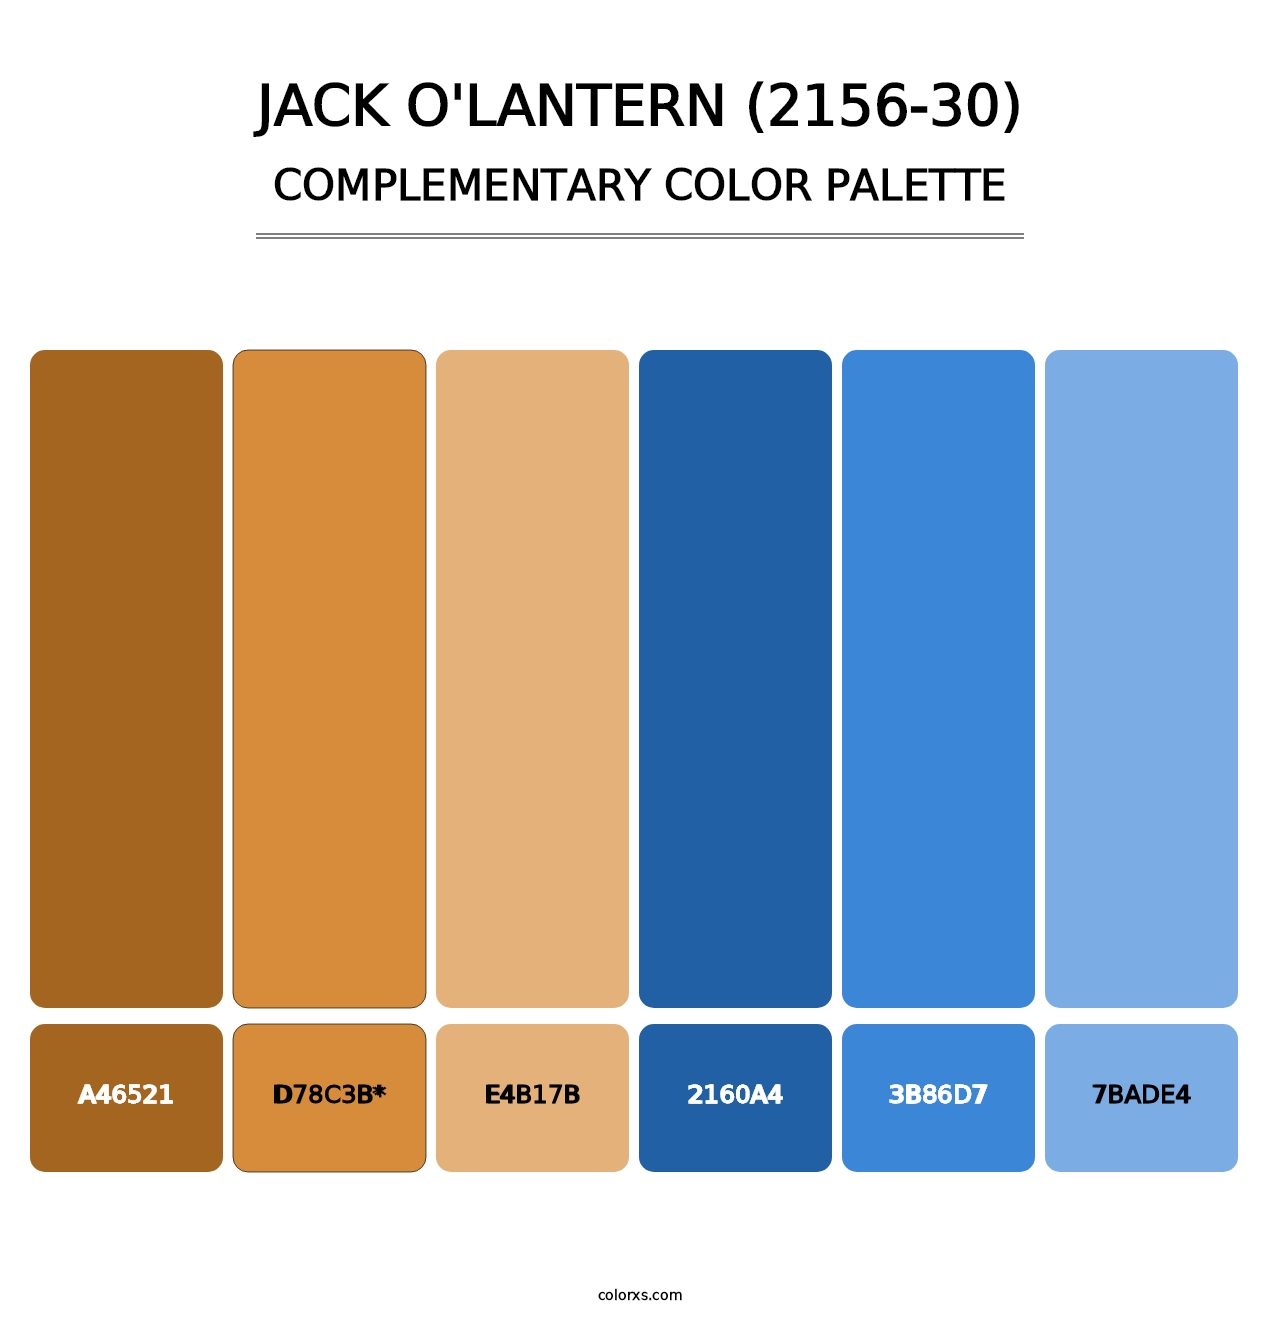 Jack O'Lantern (2156-30) - Complementary Color Palette